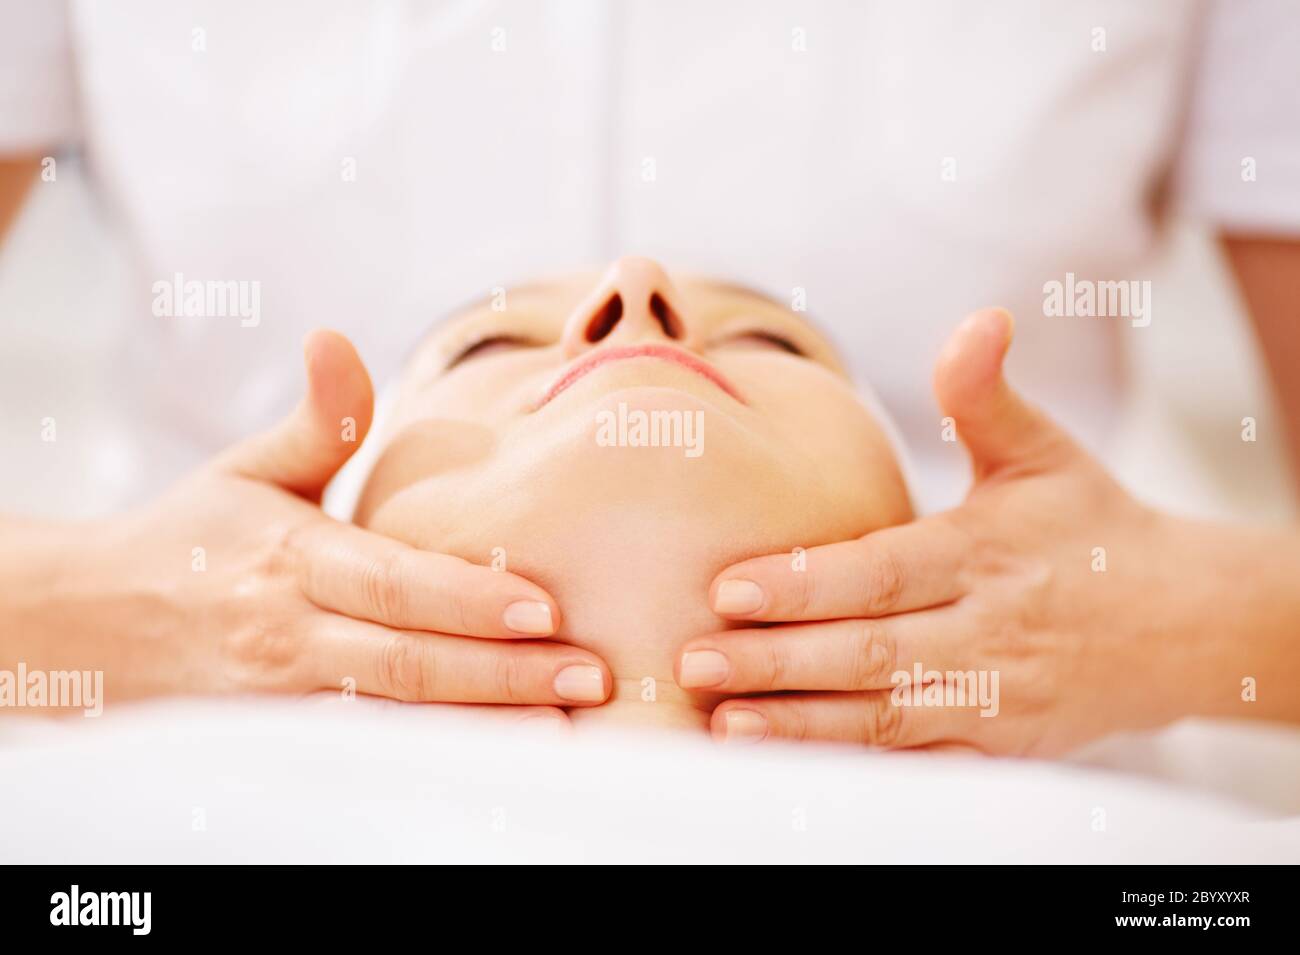 Woman under facial treatment at beauty spa Stock Photo